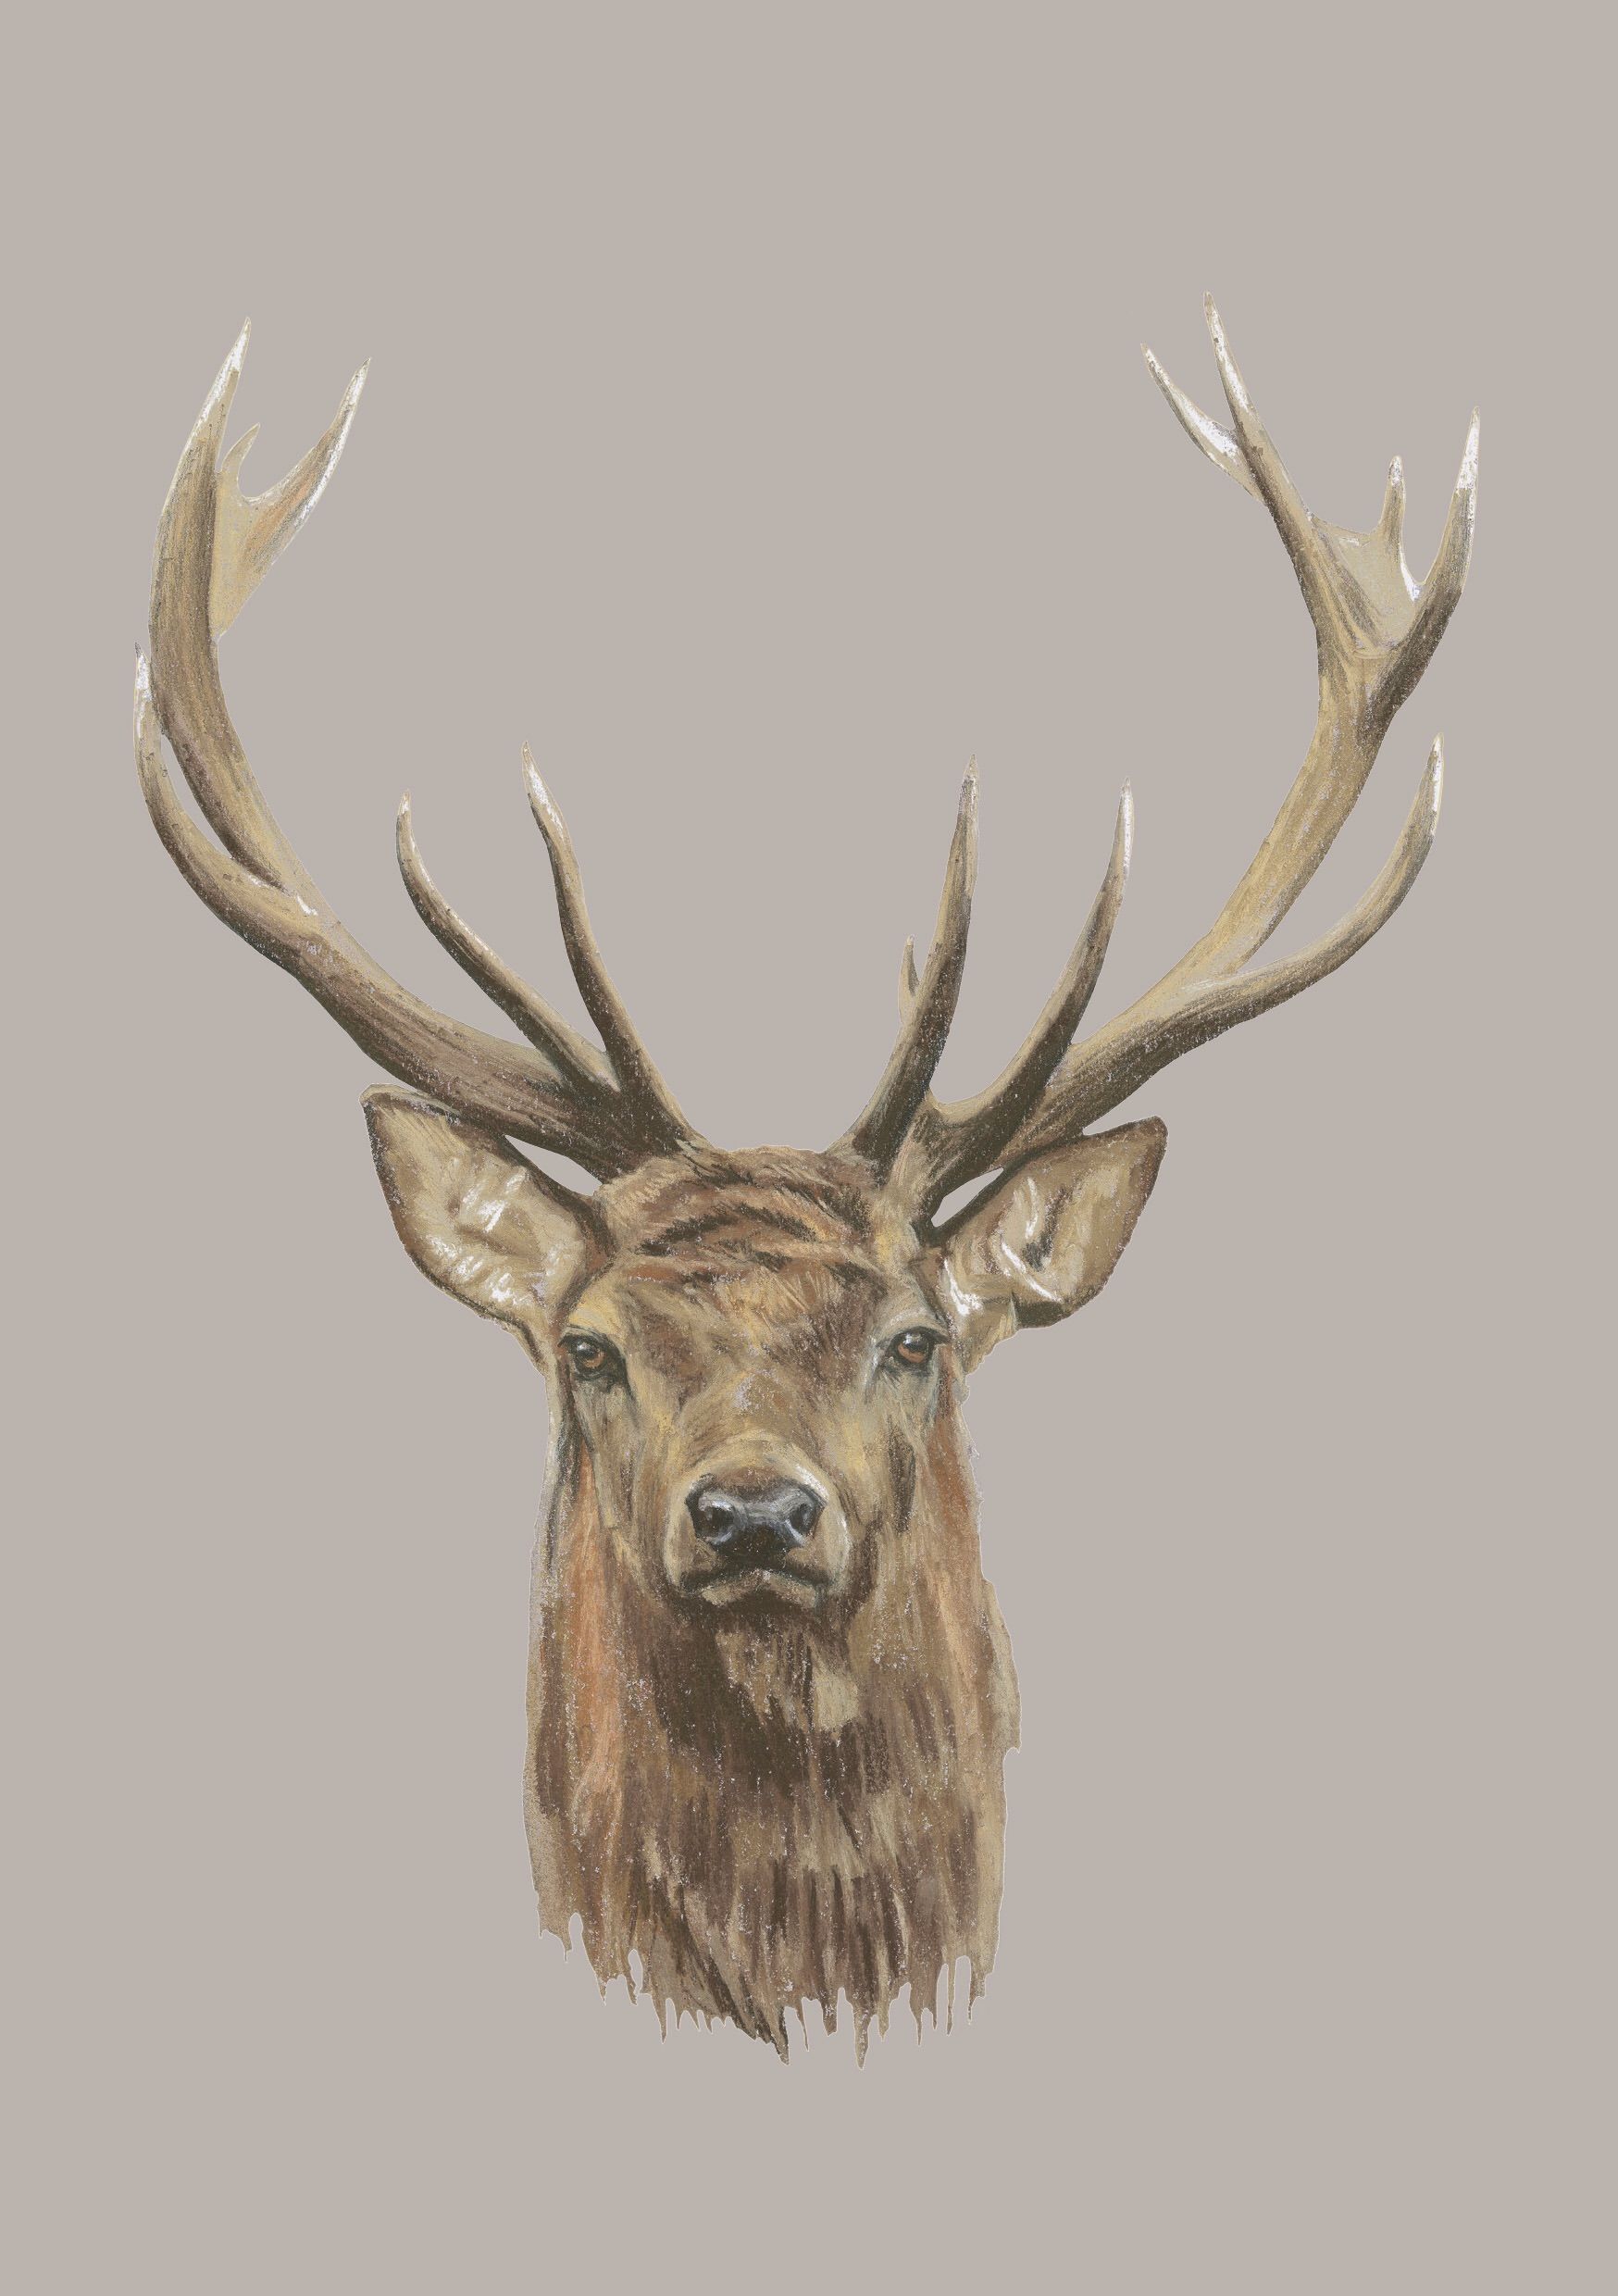 Deer head by Anon